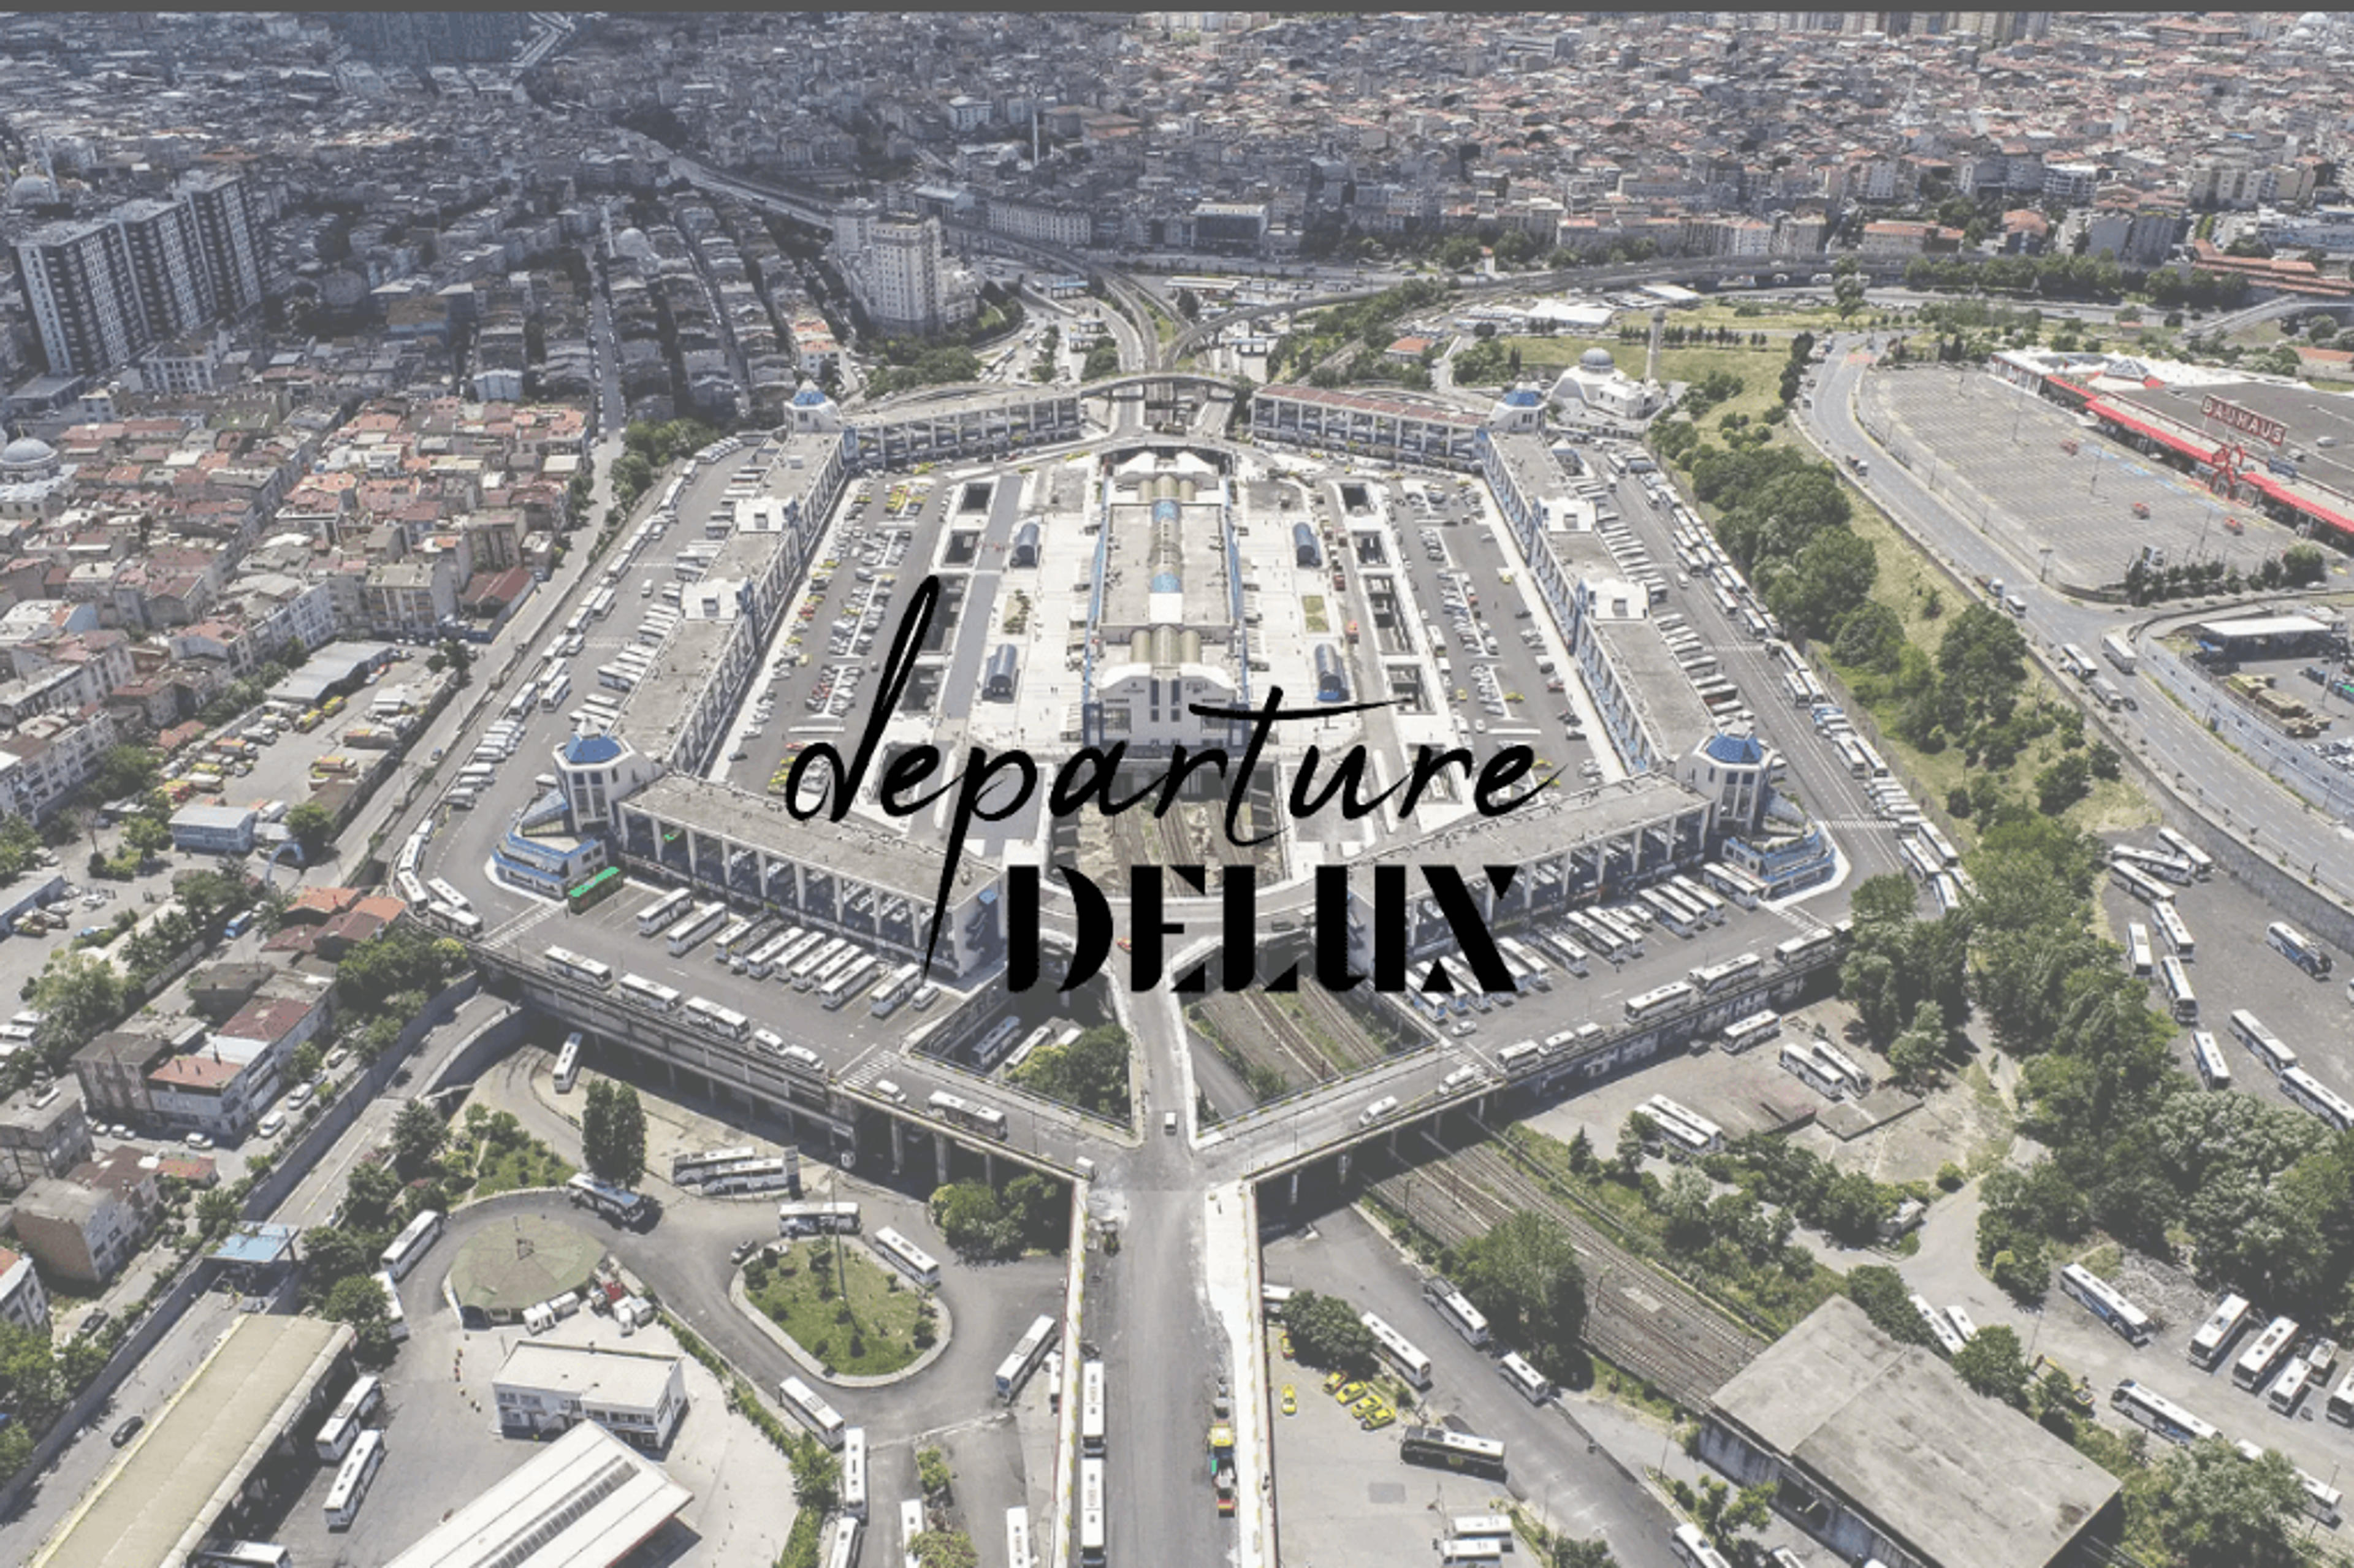 İga İstanbul Havalimanı Bayrampaşa Transfer ve Ulaşım - havalimanı transfer,istanbul havalimanı,bayrampaşa